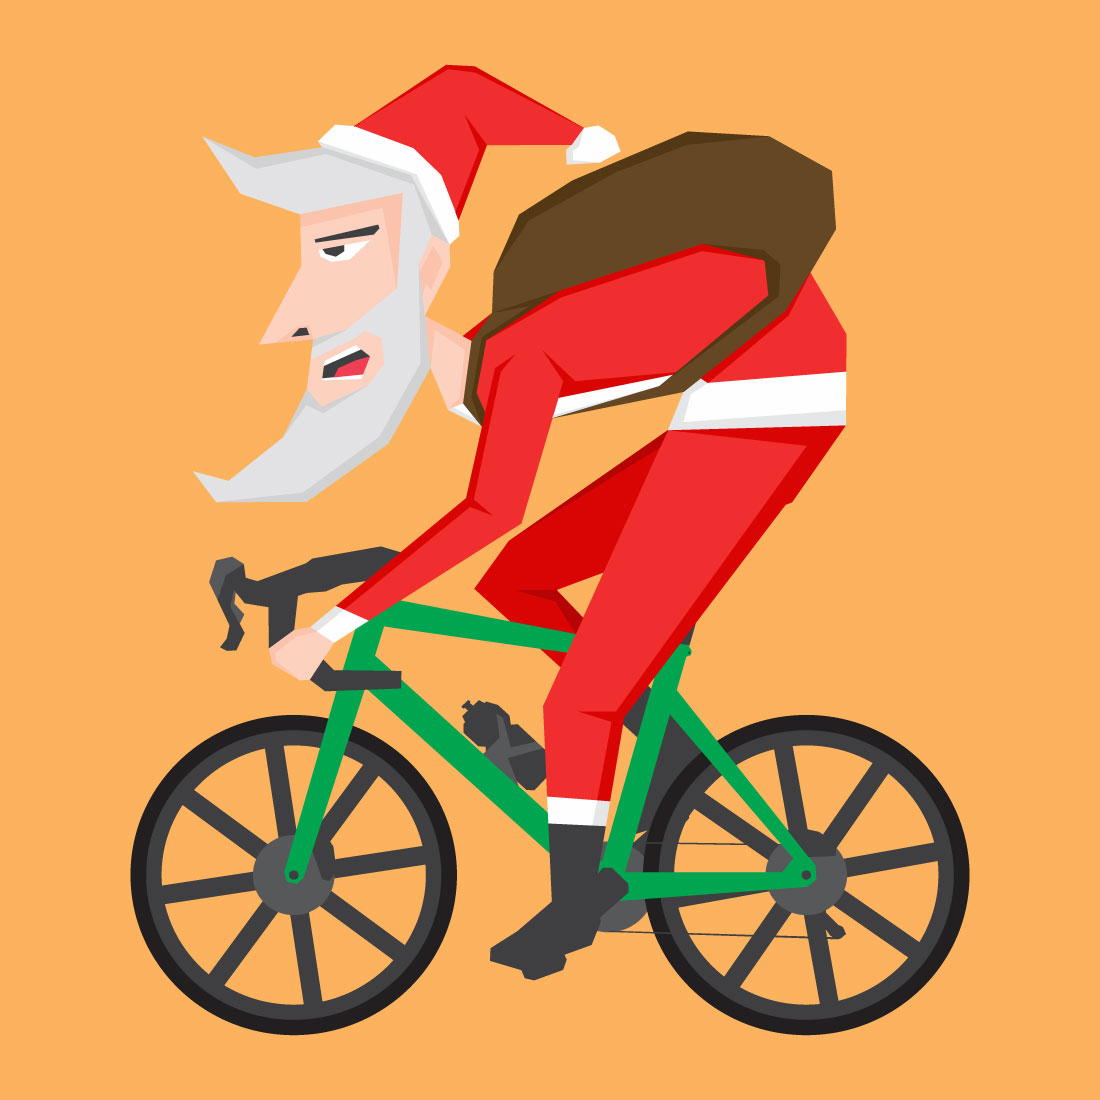 Cute Santa Claus Riding Bike pinterets image.